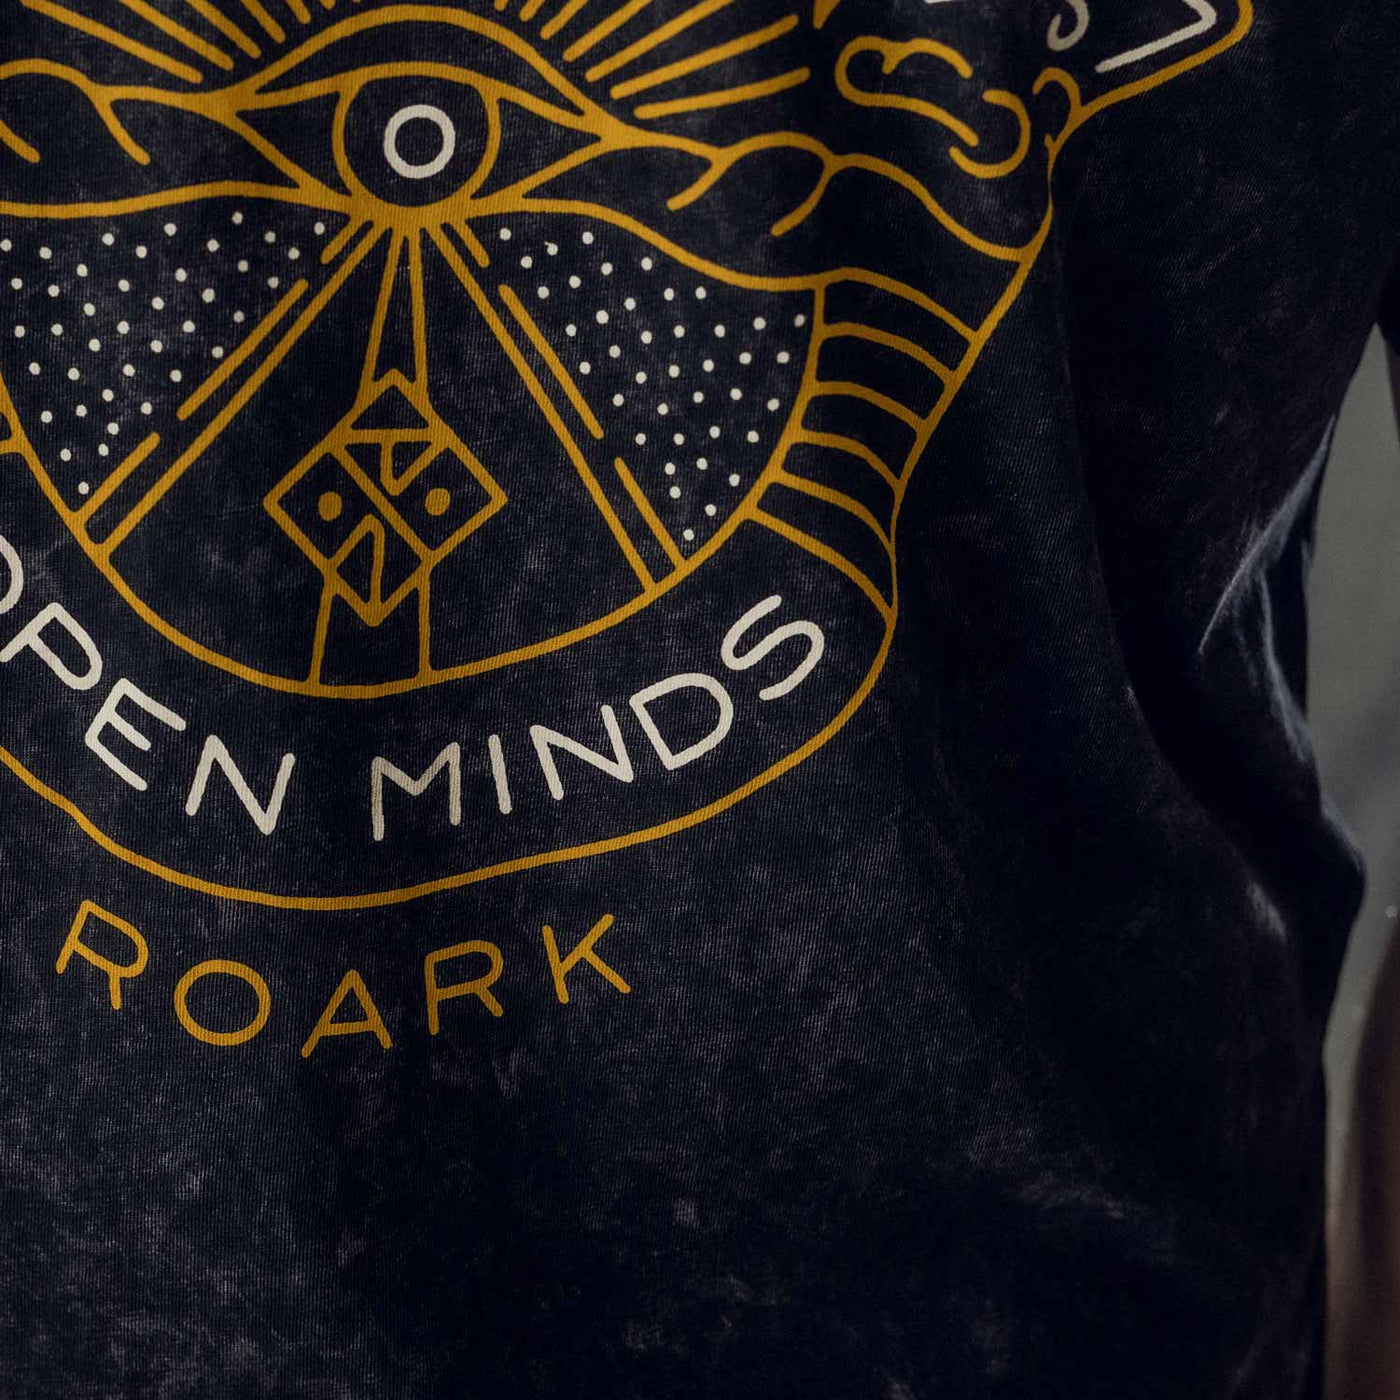 T-shirt - Open roads open minds - sort - washed